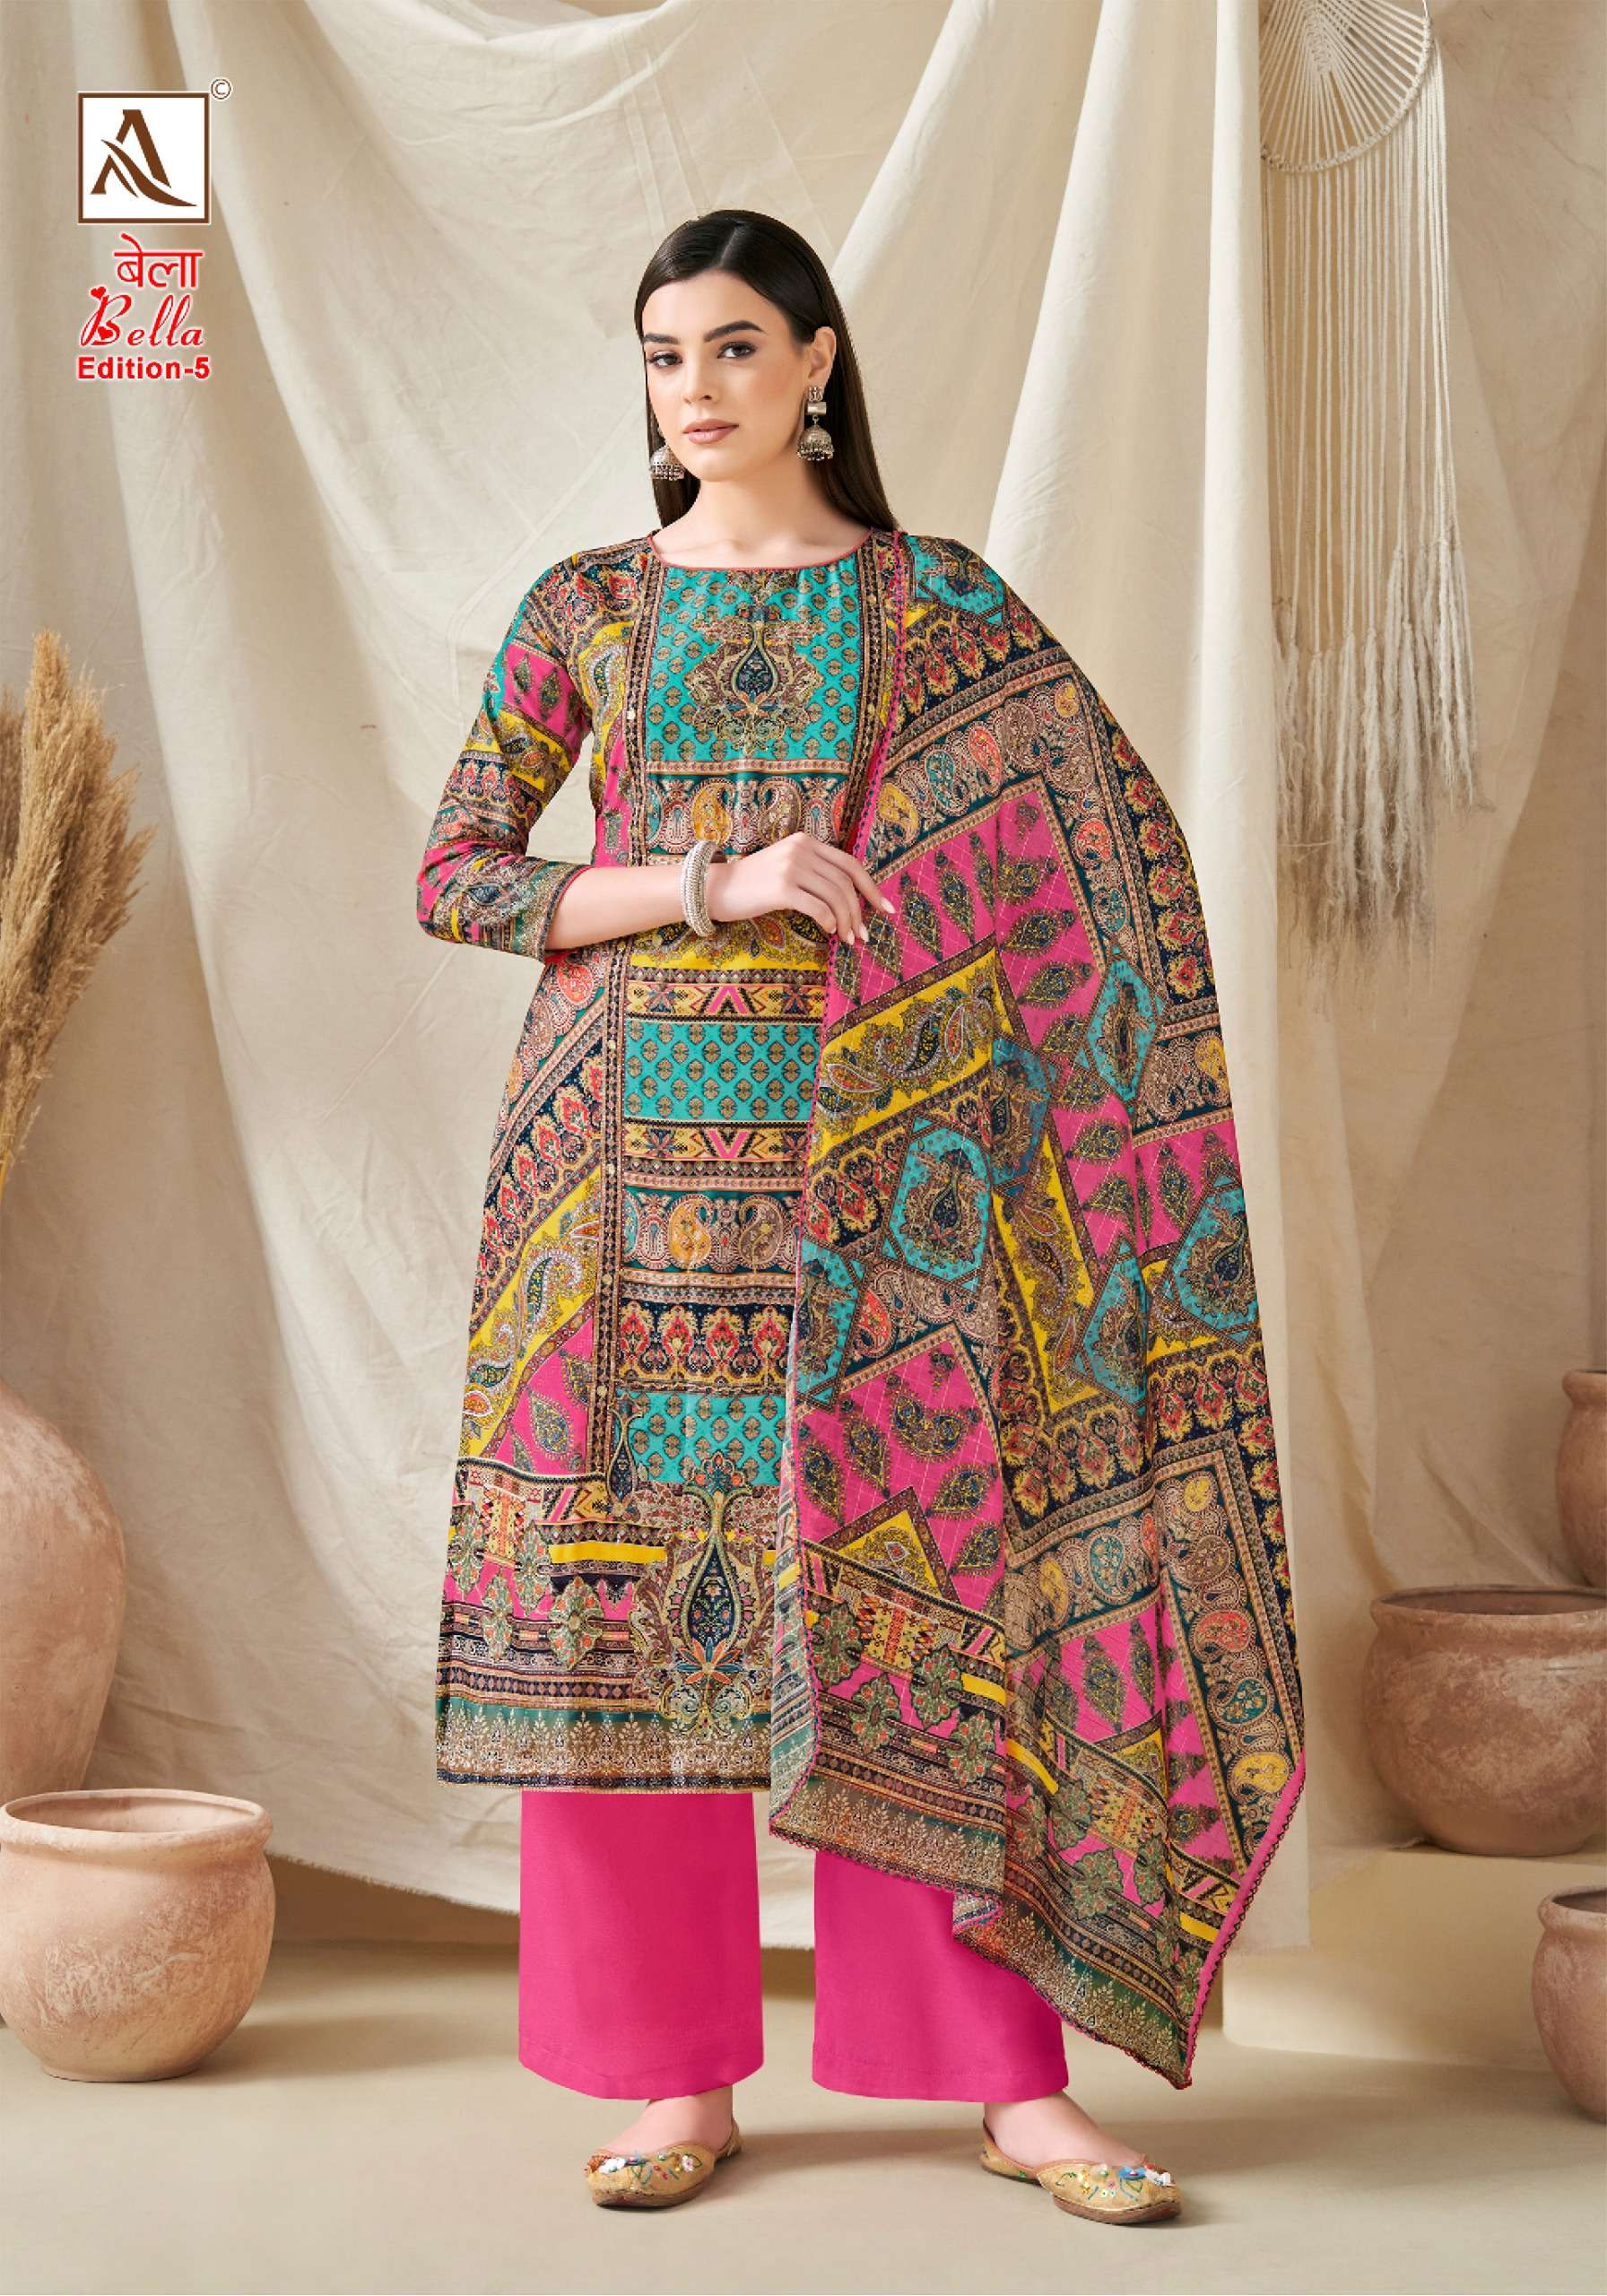 alok suit bella-5 designer pakistani salwar kameez wholesaler surat gujarat